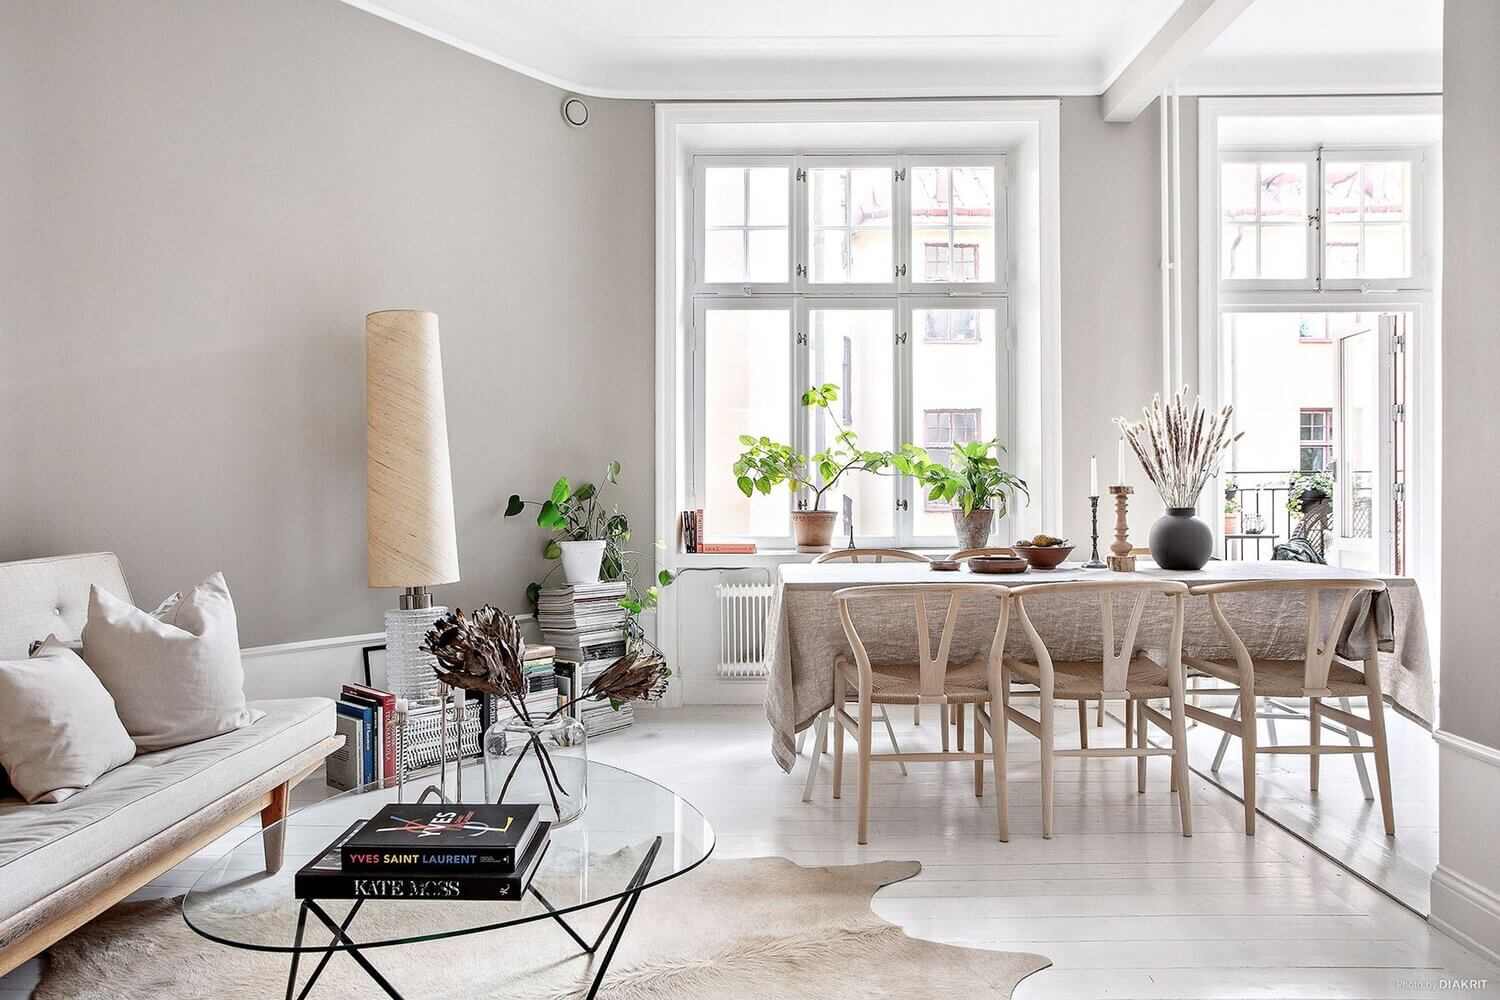 ASereneLightGreyWhiteStockholmApartment TheNordroom1 A Serene Light Grey & White Stockholm Apartment